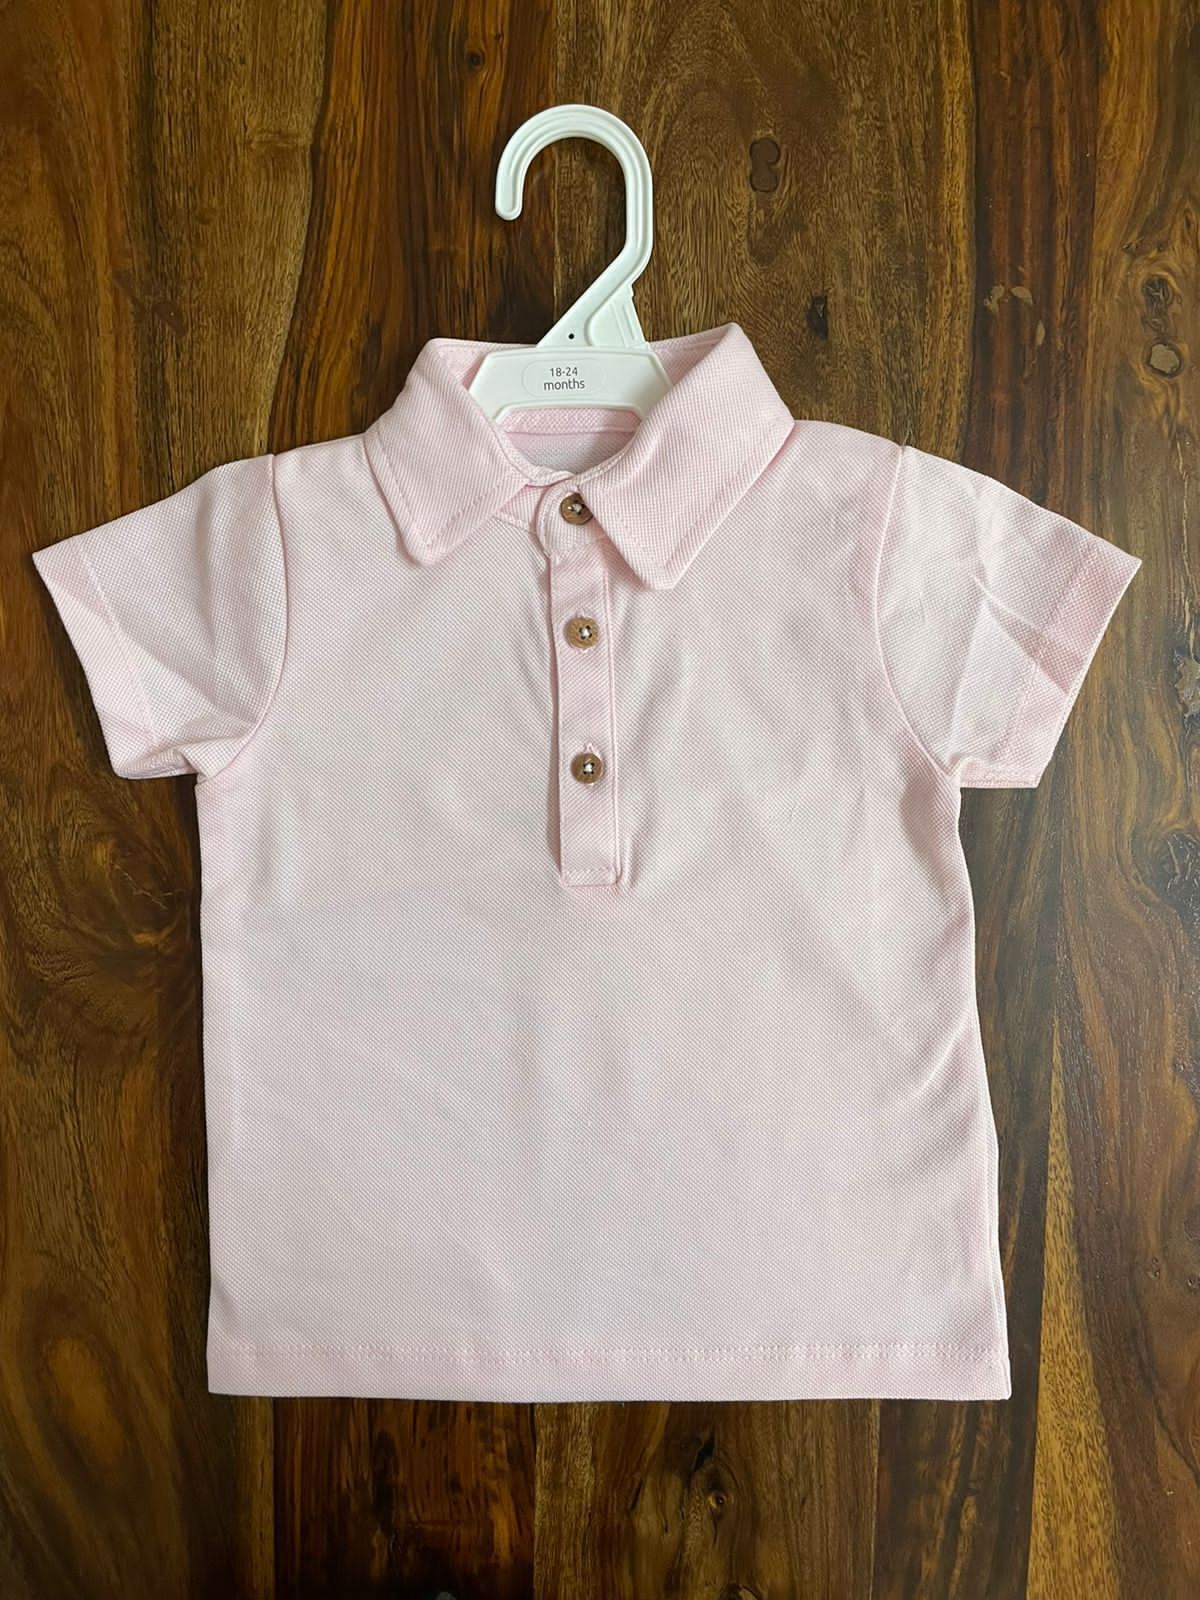 BabyNeeds Daily Wear Plain Collar Cotton T-Shirts Unisex Baby Pink